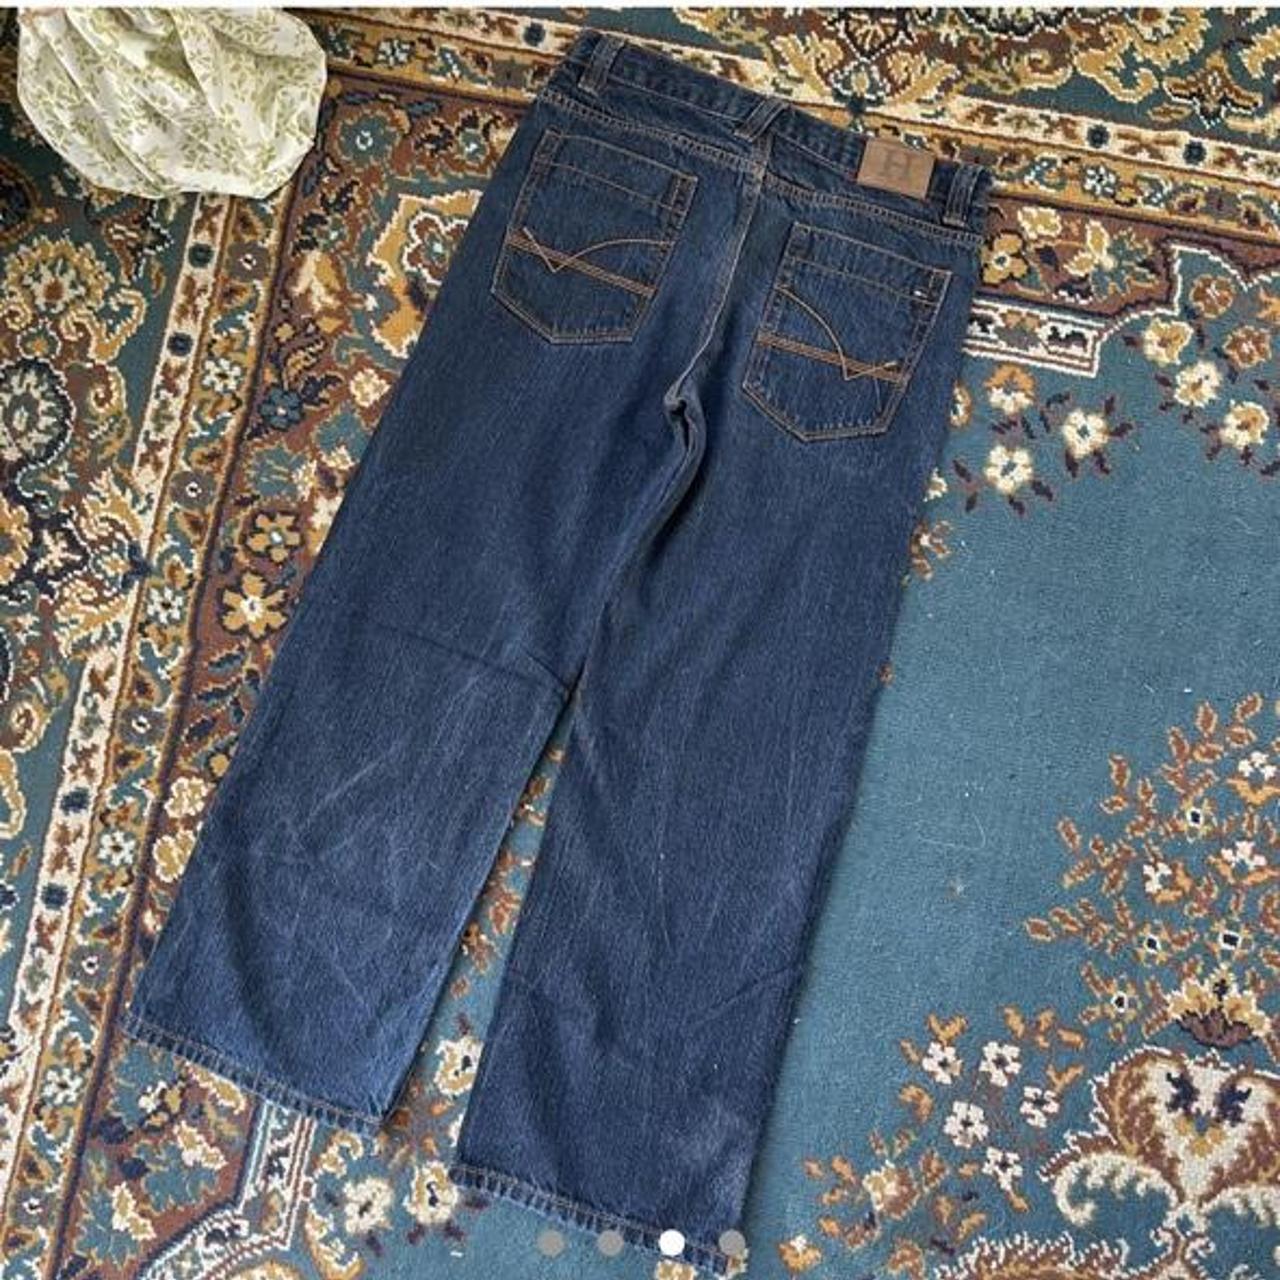 Product Image 3 - Vintage Tommy Hilfiger jeans!
- great